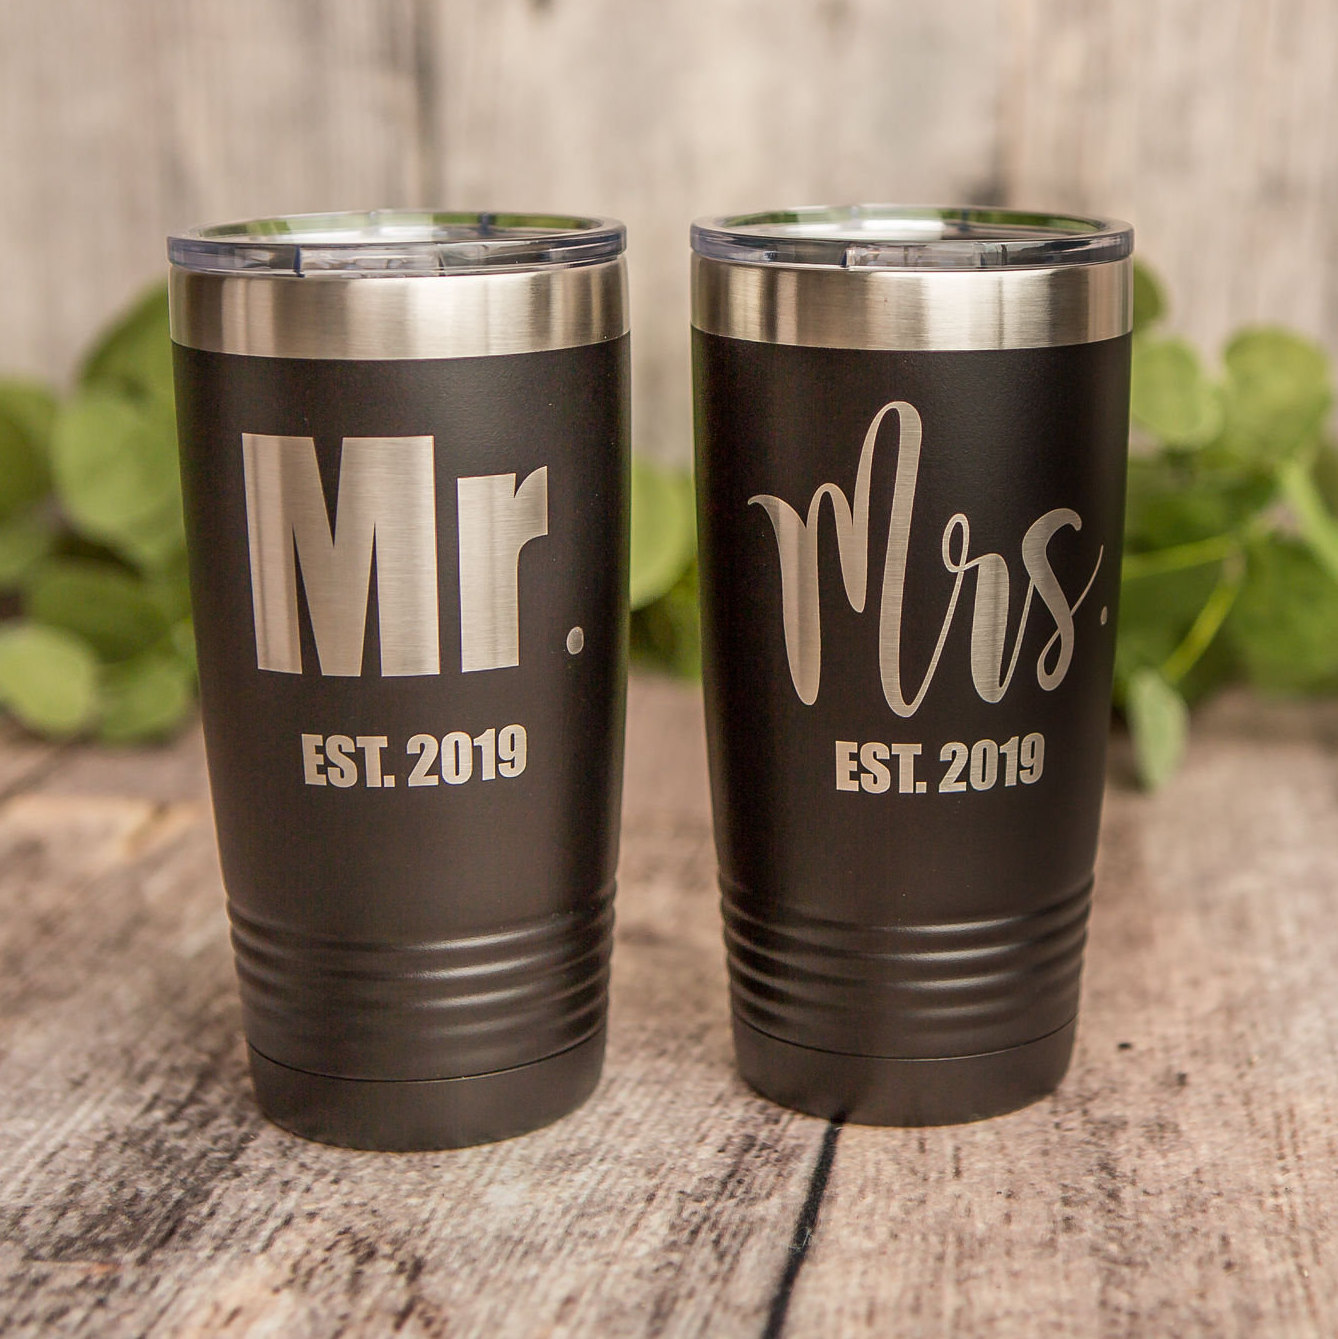 Mr. & Mrs. Engraved YETI Set